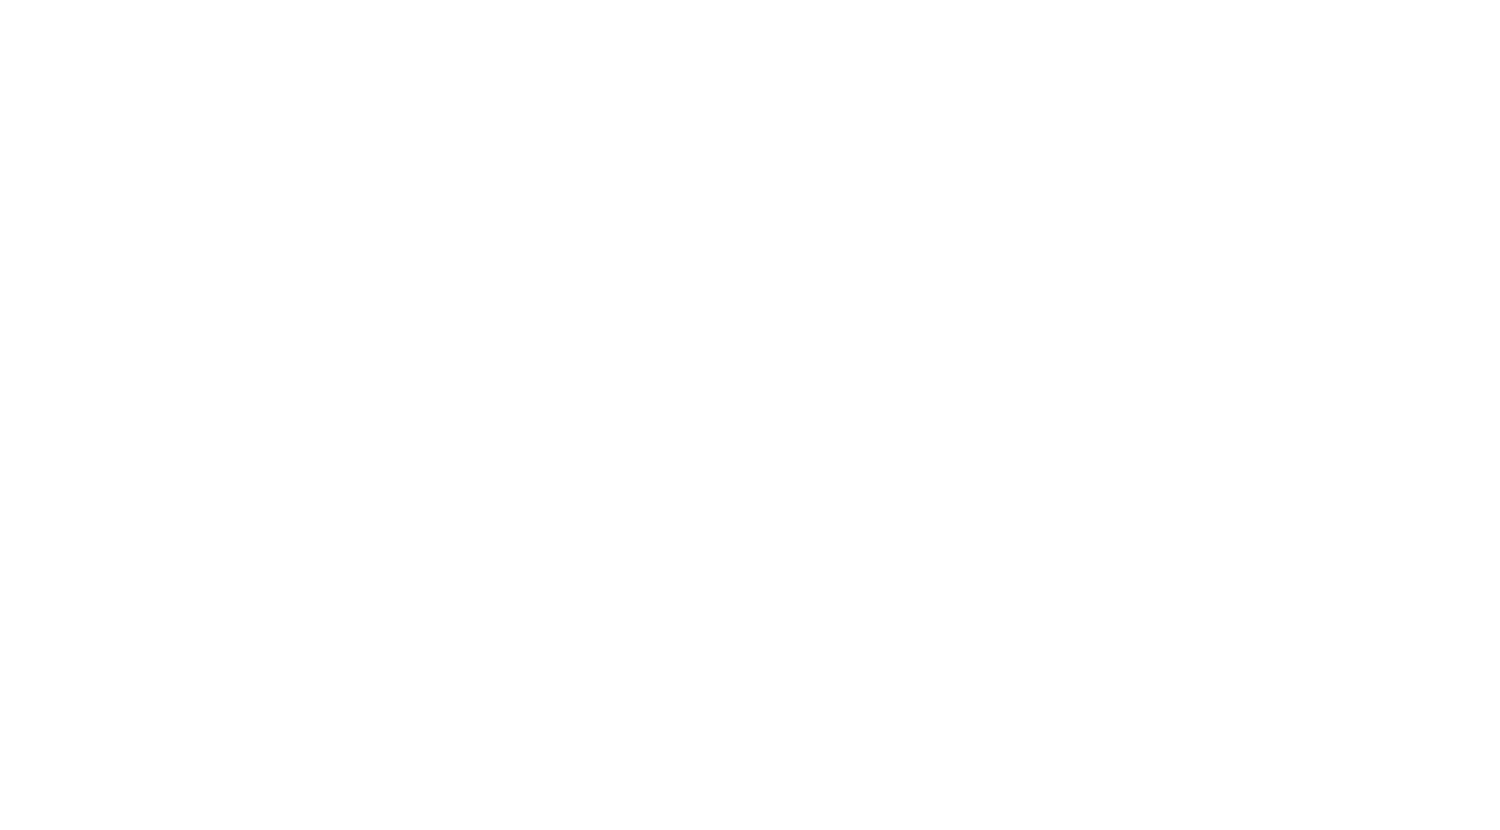 Pedal Pushers LLC